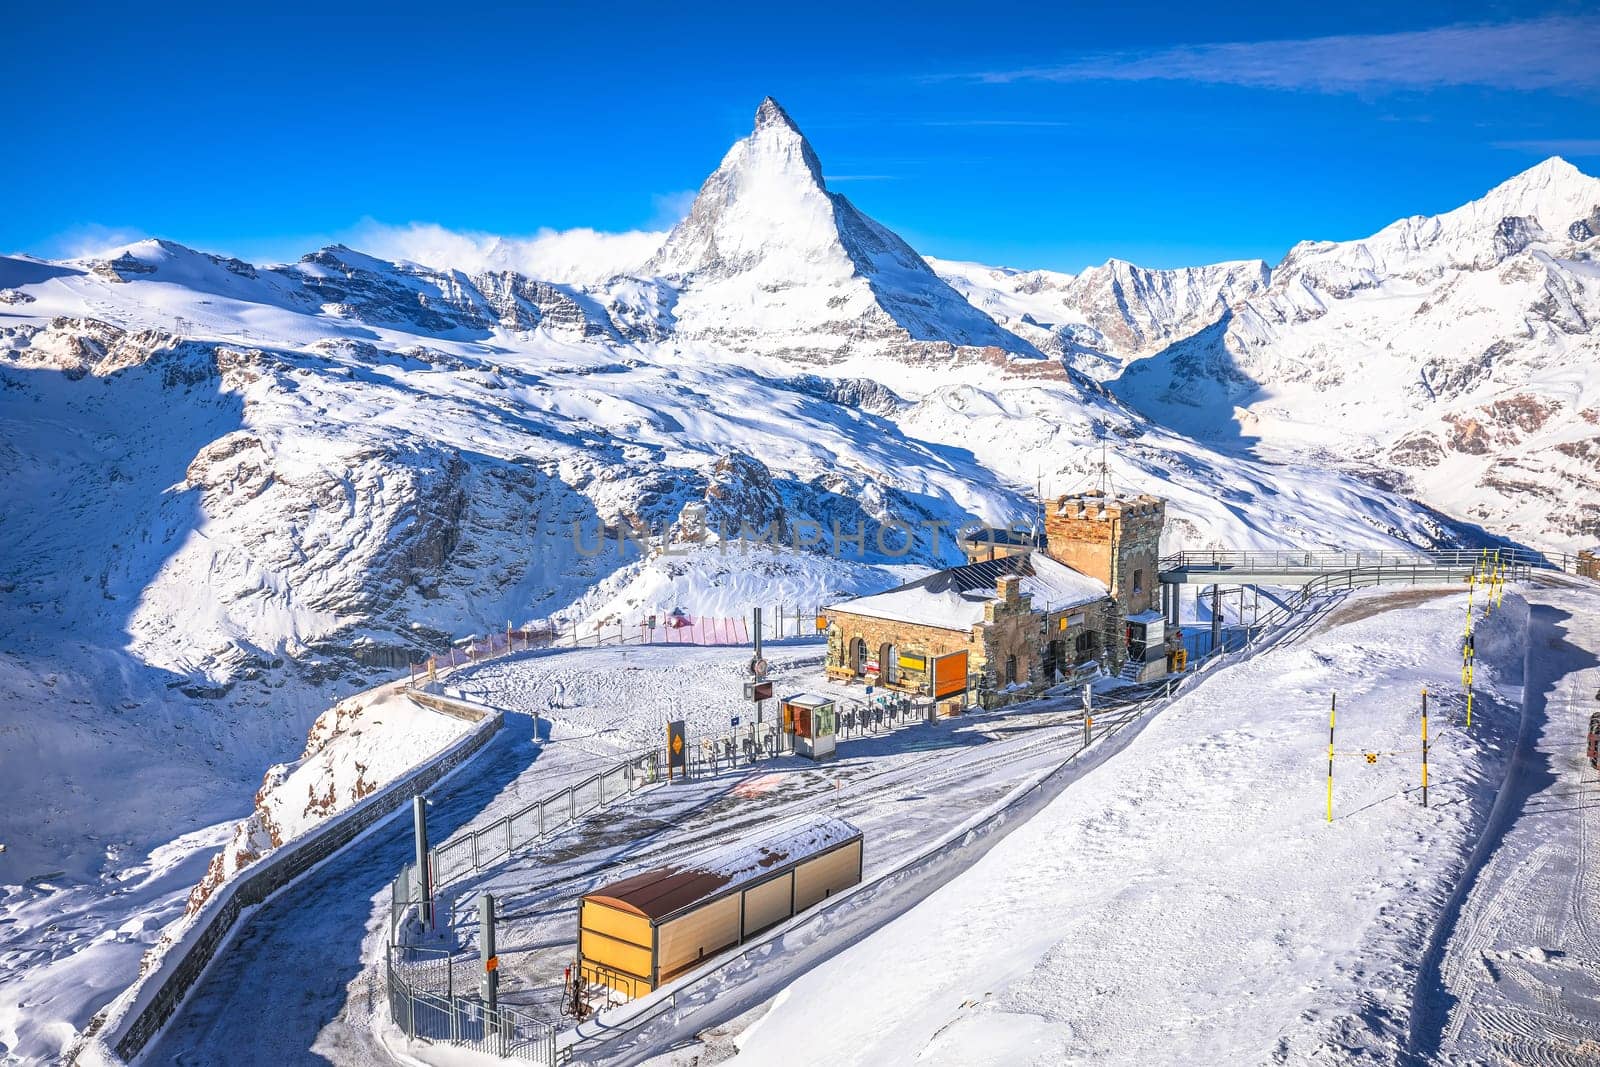 Gorngerat cogwheel railway station and Matterhorn peak in Zermatt ski area view, Valais region in Switzerland Alps